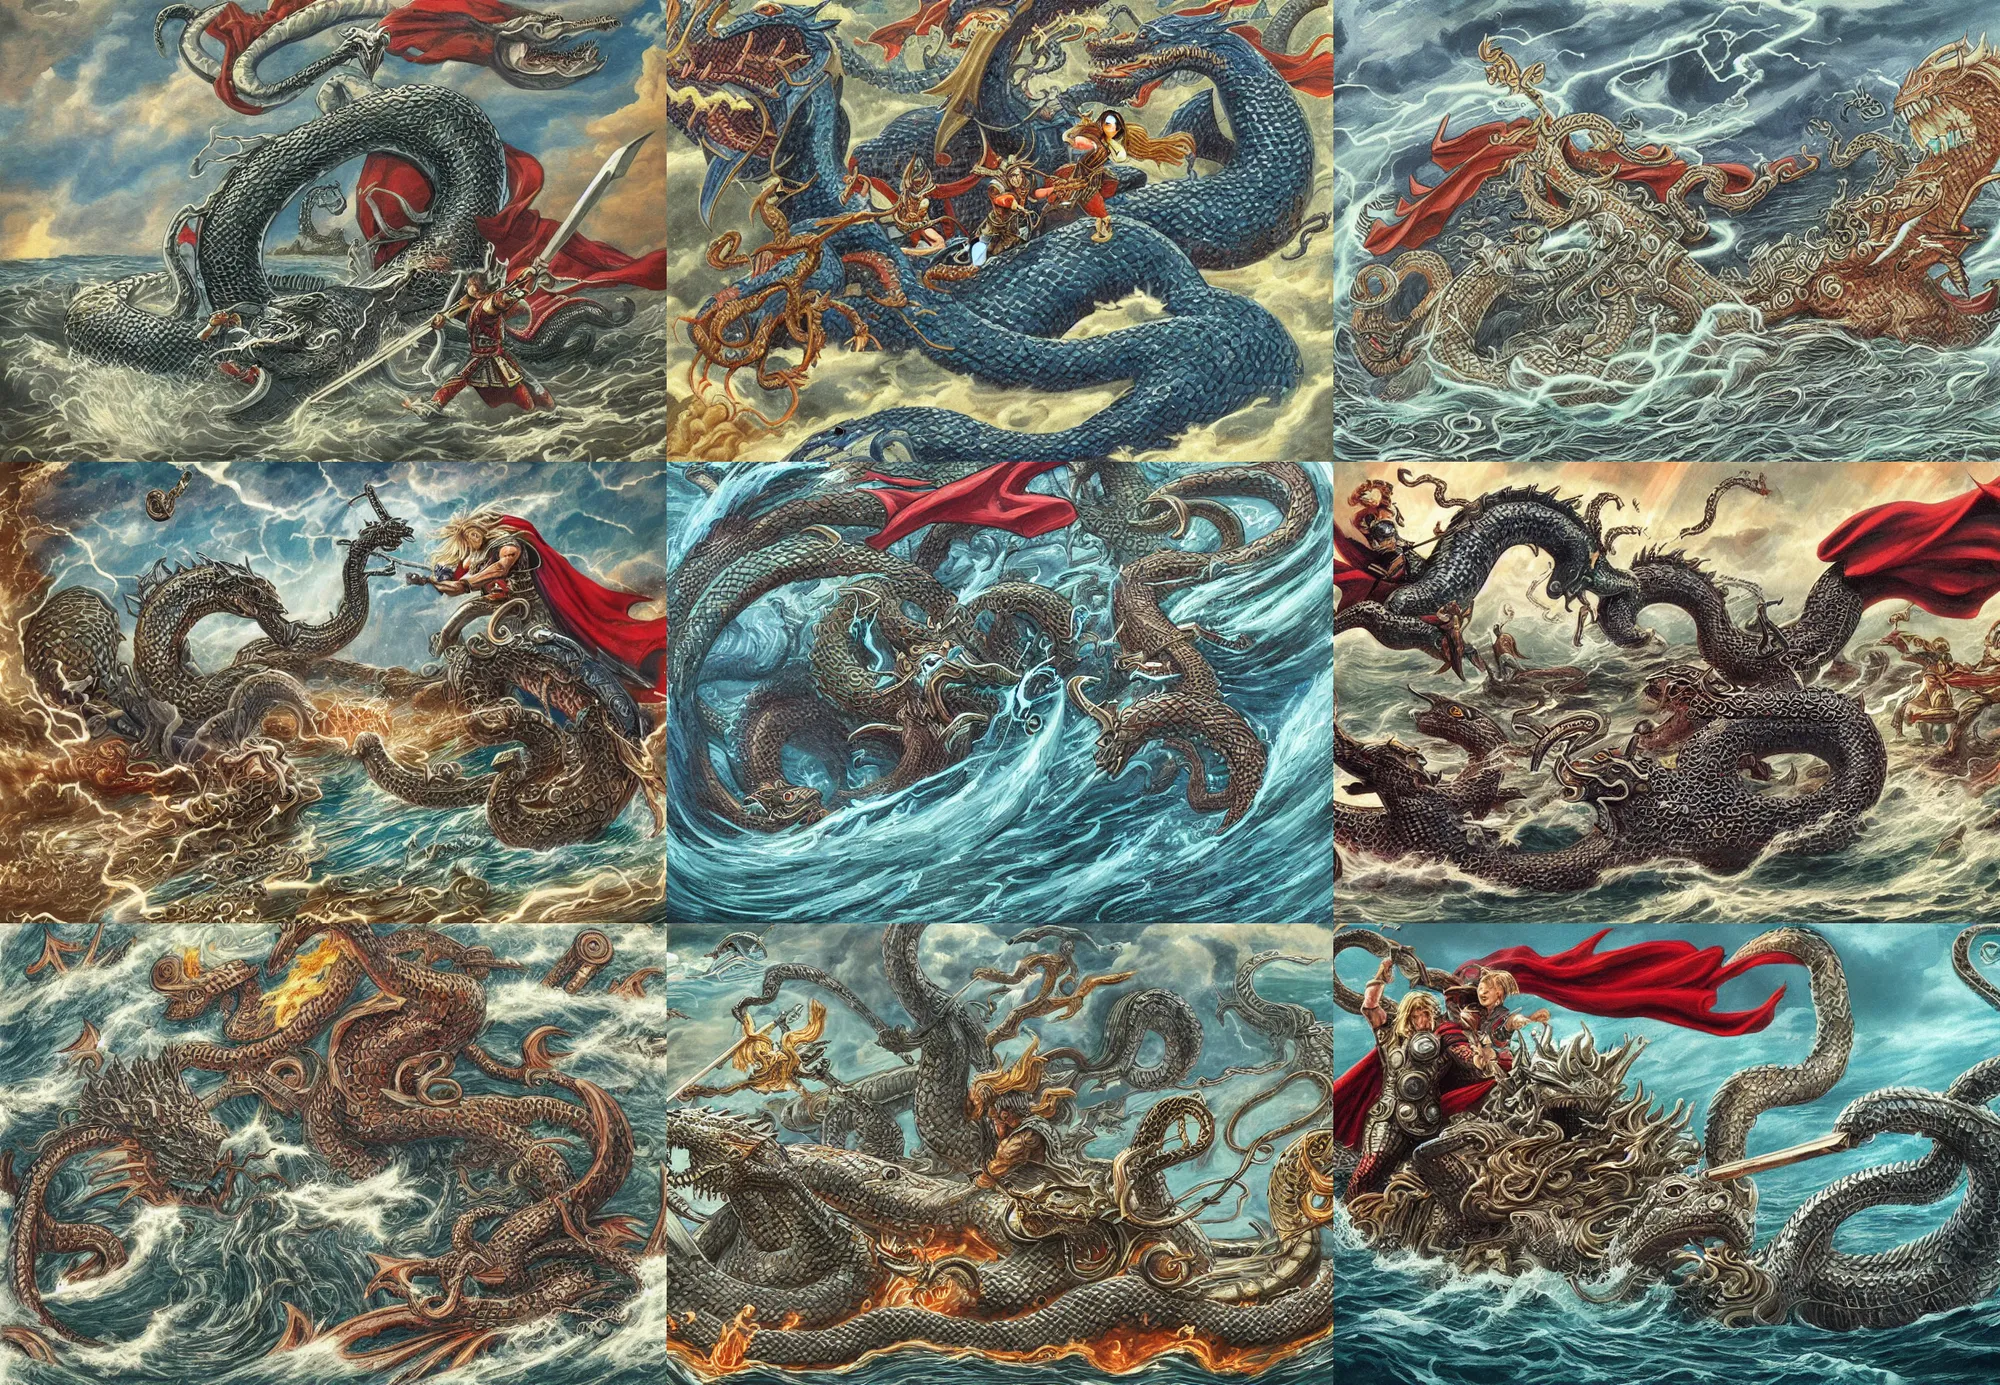 Prompt: thor god of thunder slaying sea serpent chaos dragon jormungandr, during battle of ragnarok, detailed artwork